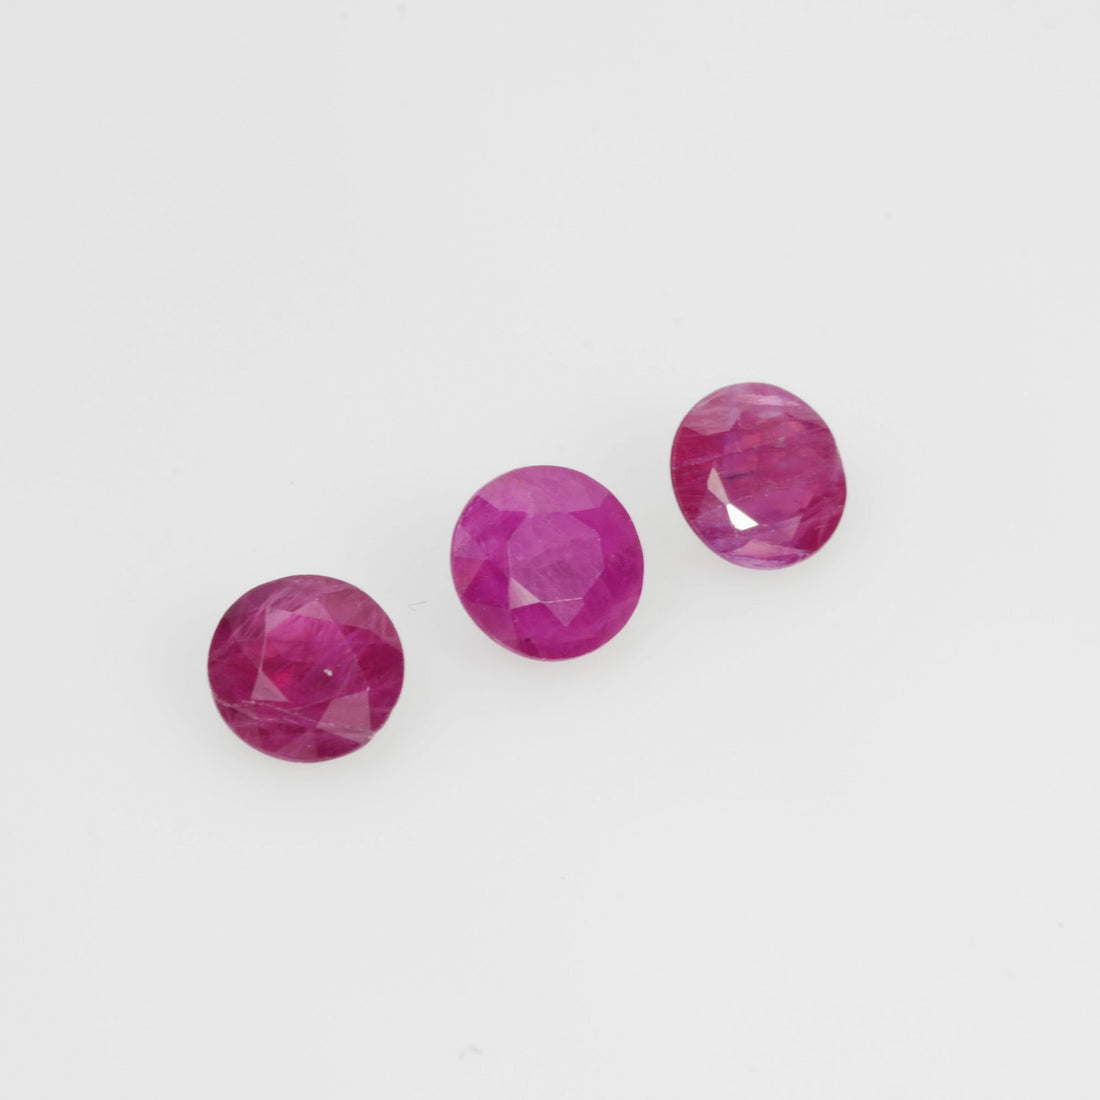 4.3-5.2 mm Natural Ruby Loose Gemstone Round Cut